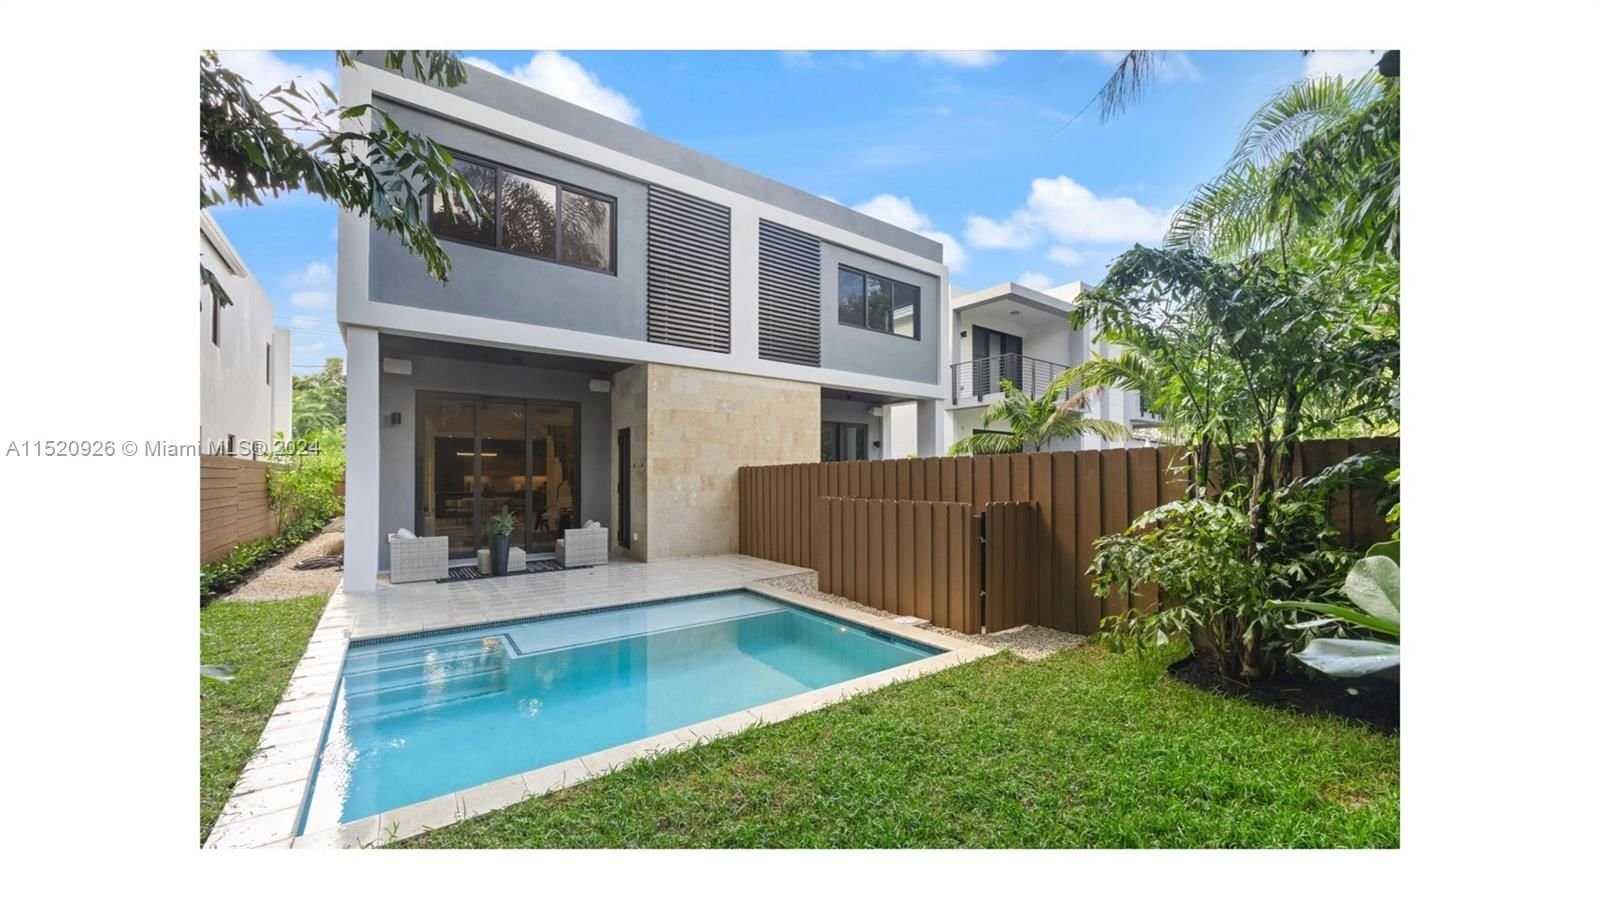 Real estate property located at 3645 23rd terrace, Miami-Dade County, AMND MIAMI SUBURBAN ACRES, Miami, FL